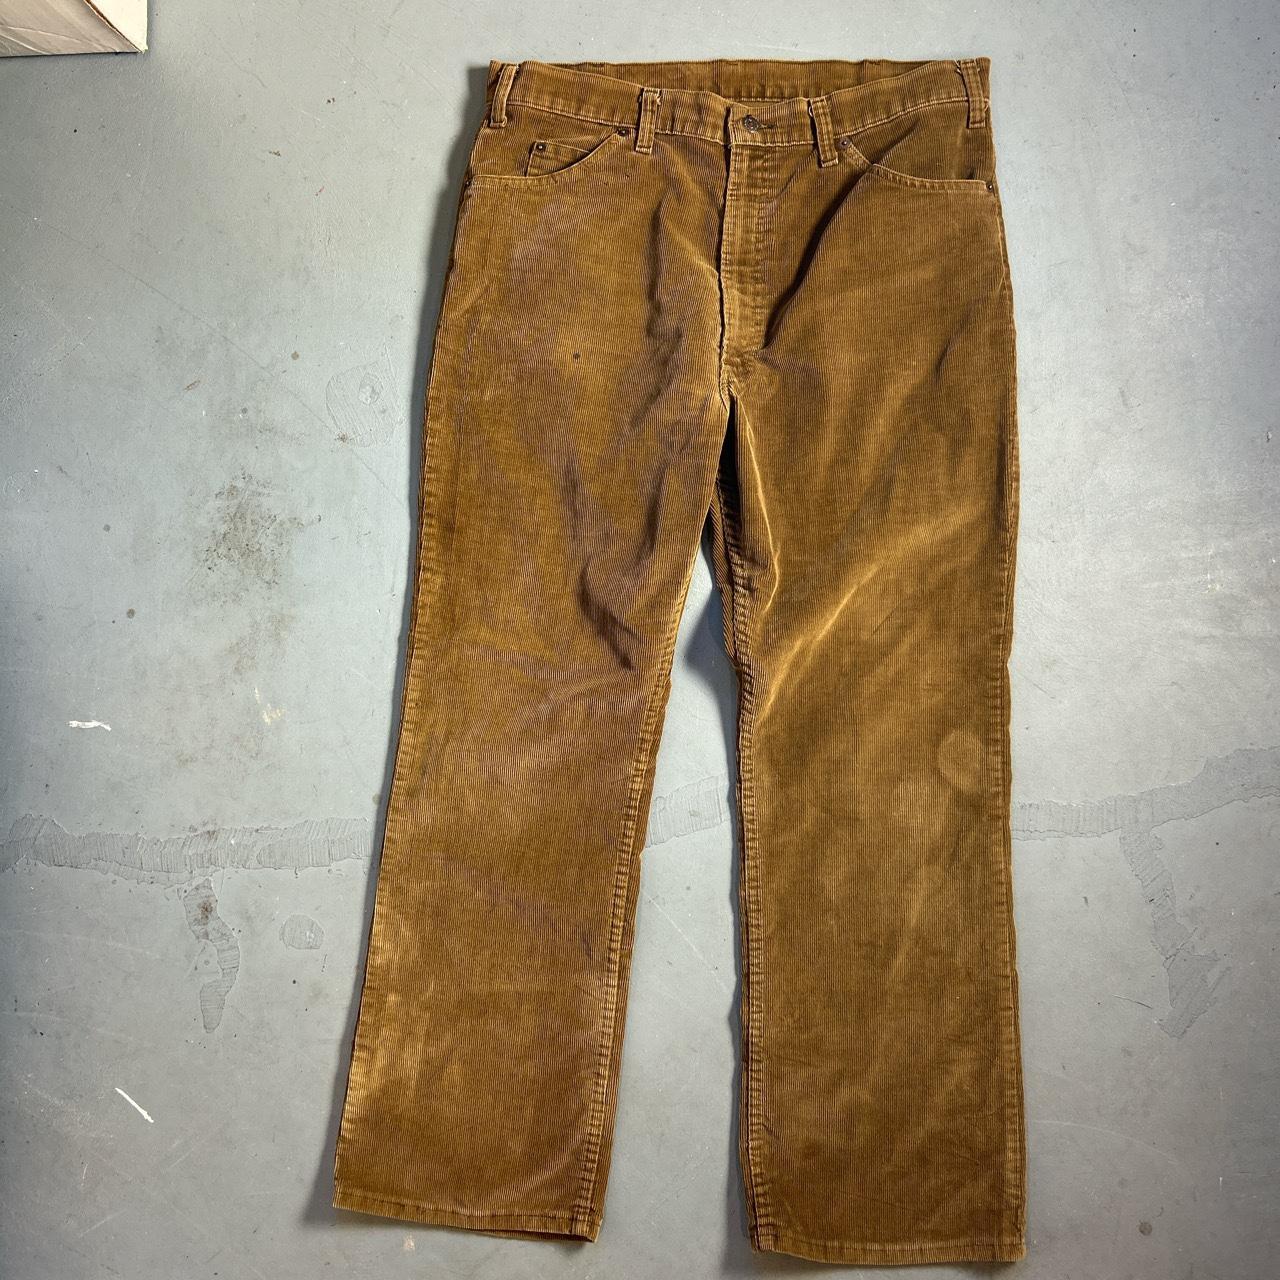 Levi Strauss brown corduroy pants size 36 waist 31... - Depop